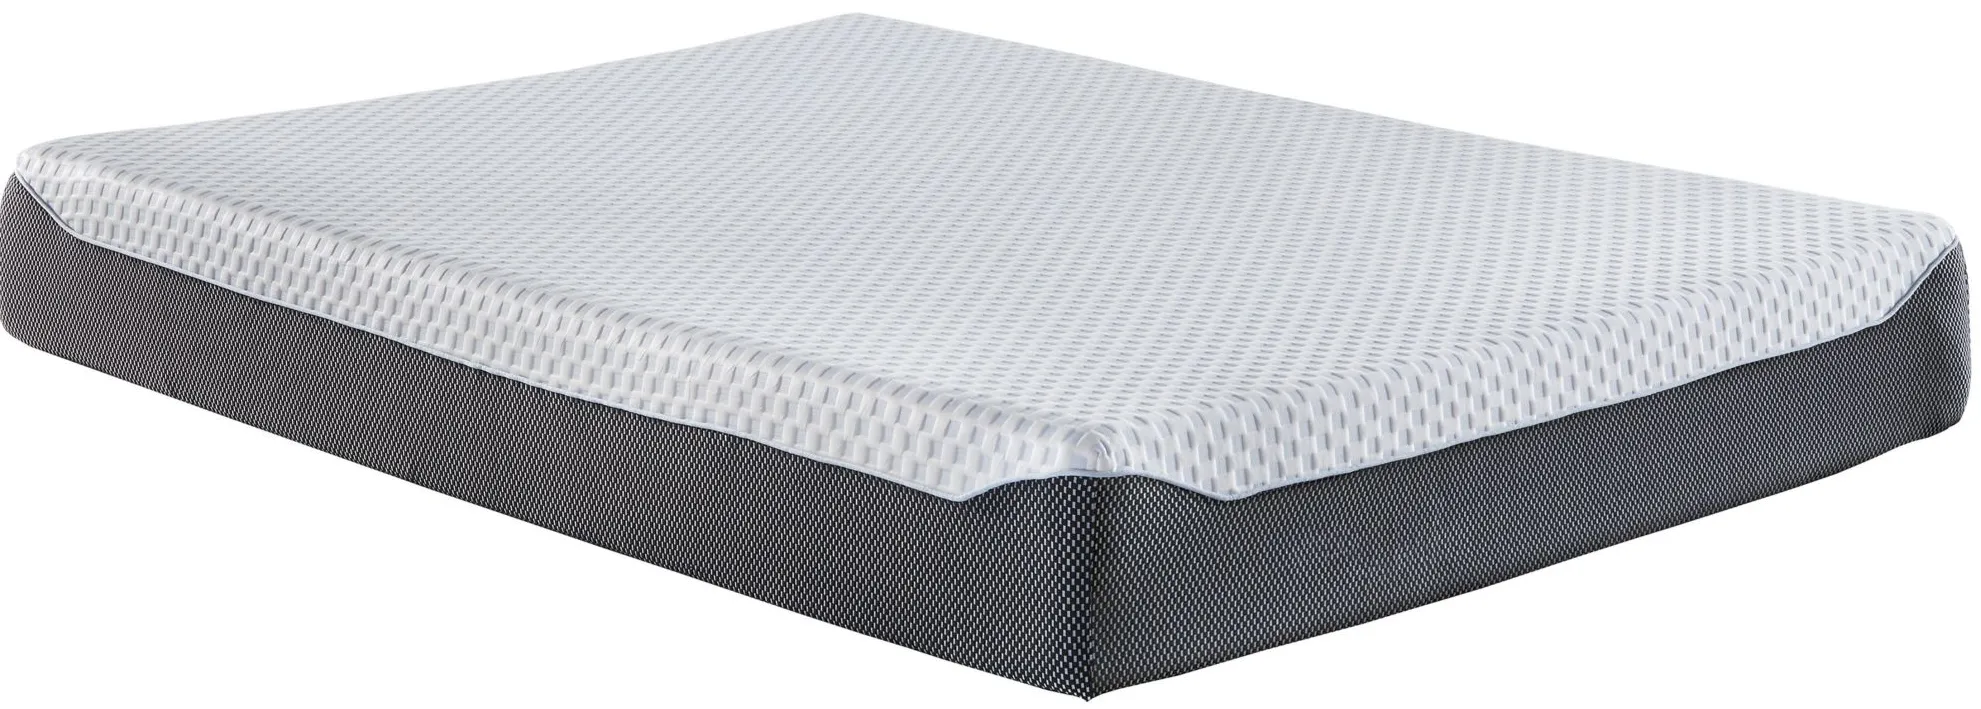 Ashley Sleep Gruve 10 Inch Firm Memory Foam Mattress in White/Blue by Ashley Express